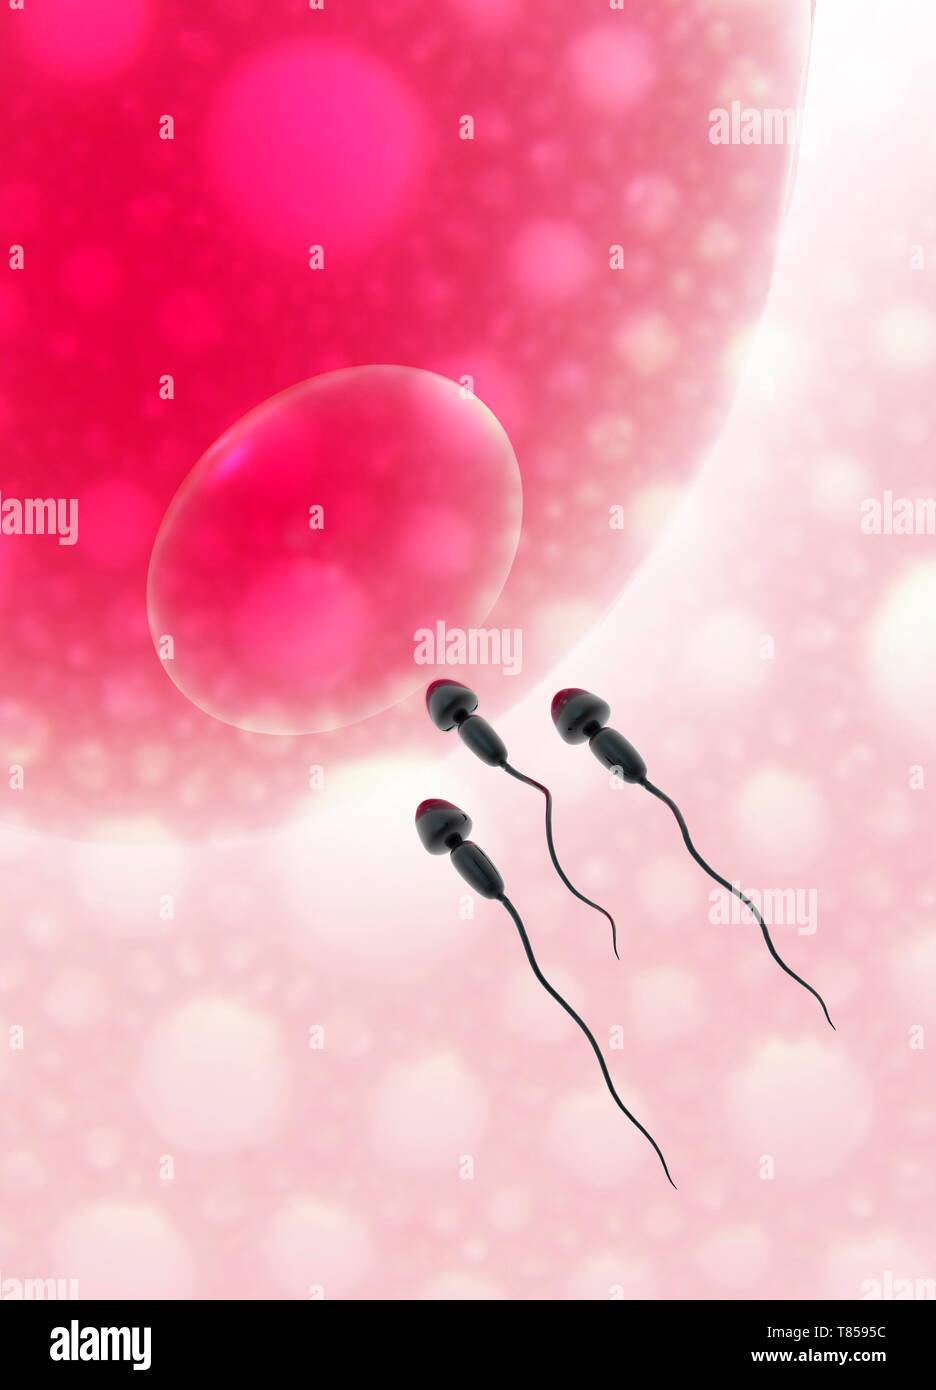 Human sperm and egg, illustration Stock Photo